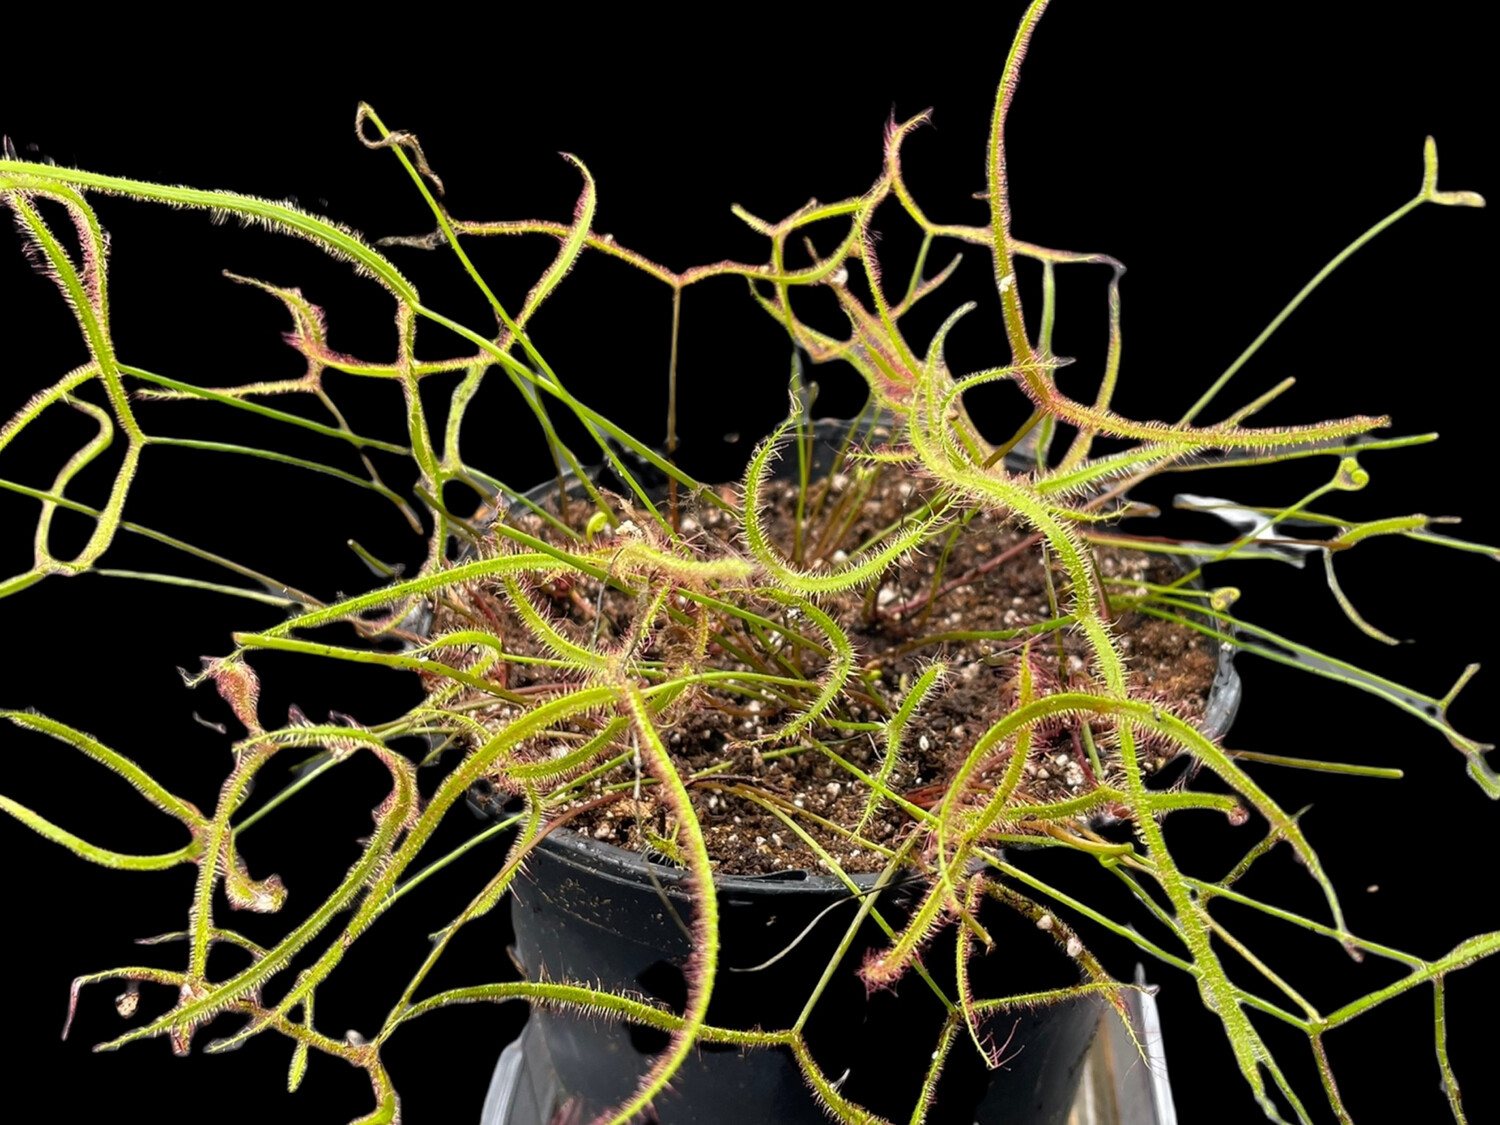 Drosera binata var. dichotoma f. extrema “Giant Plant” 